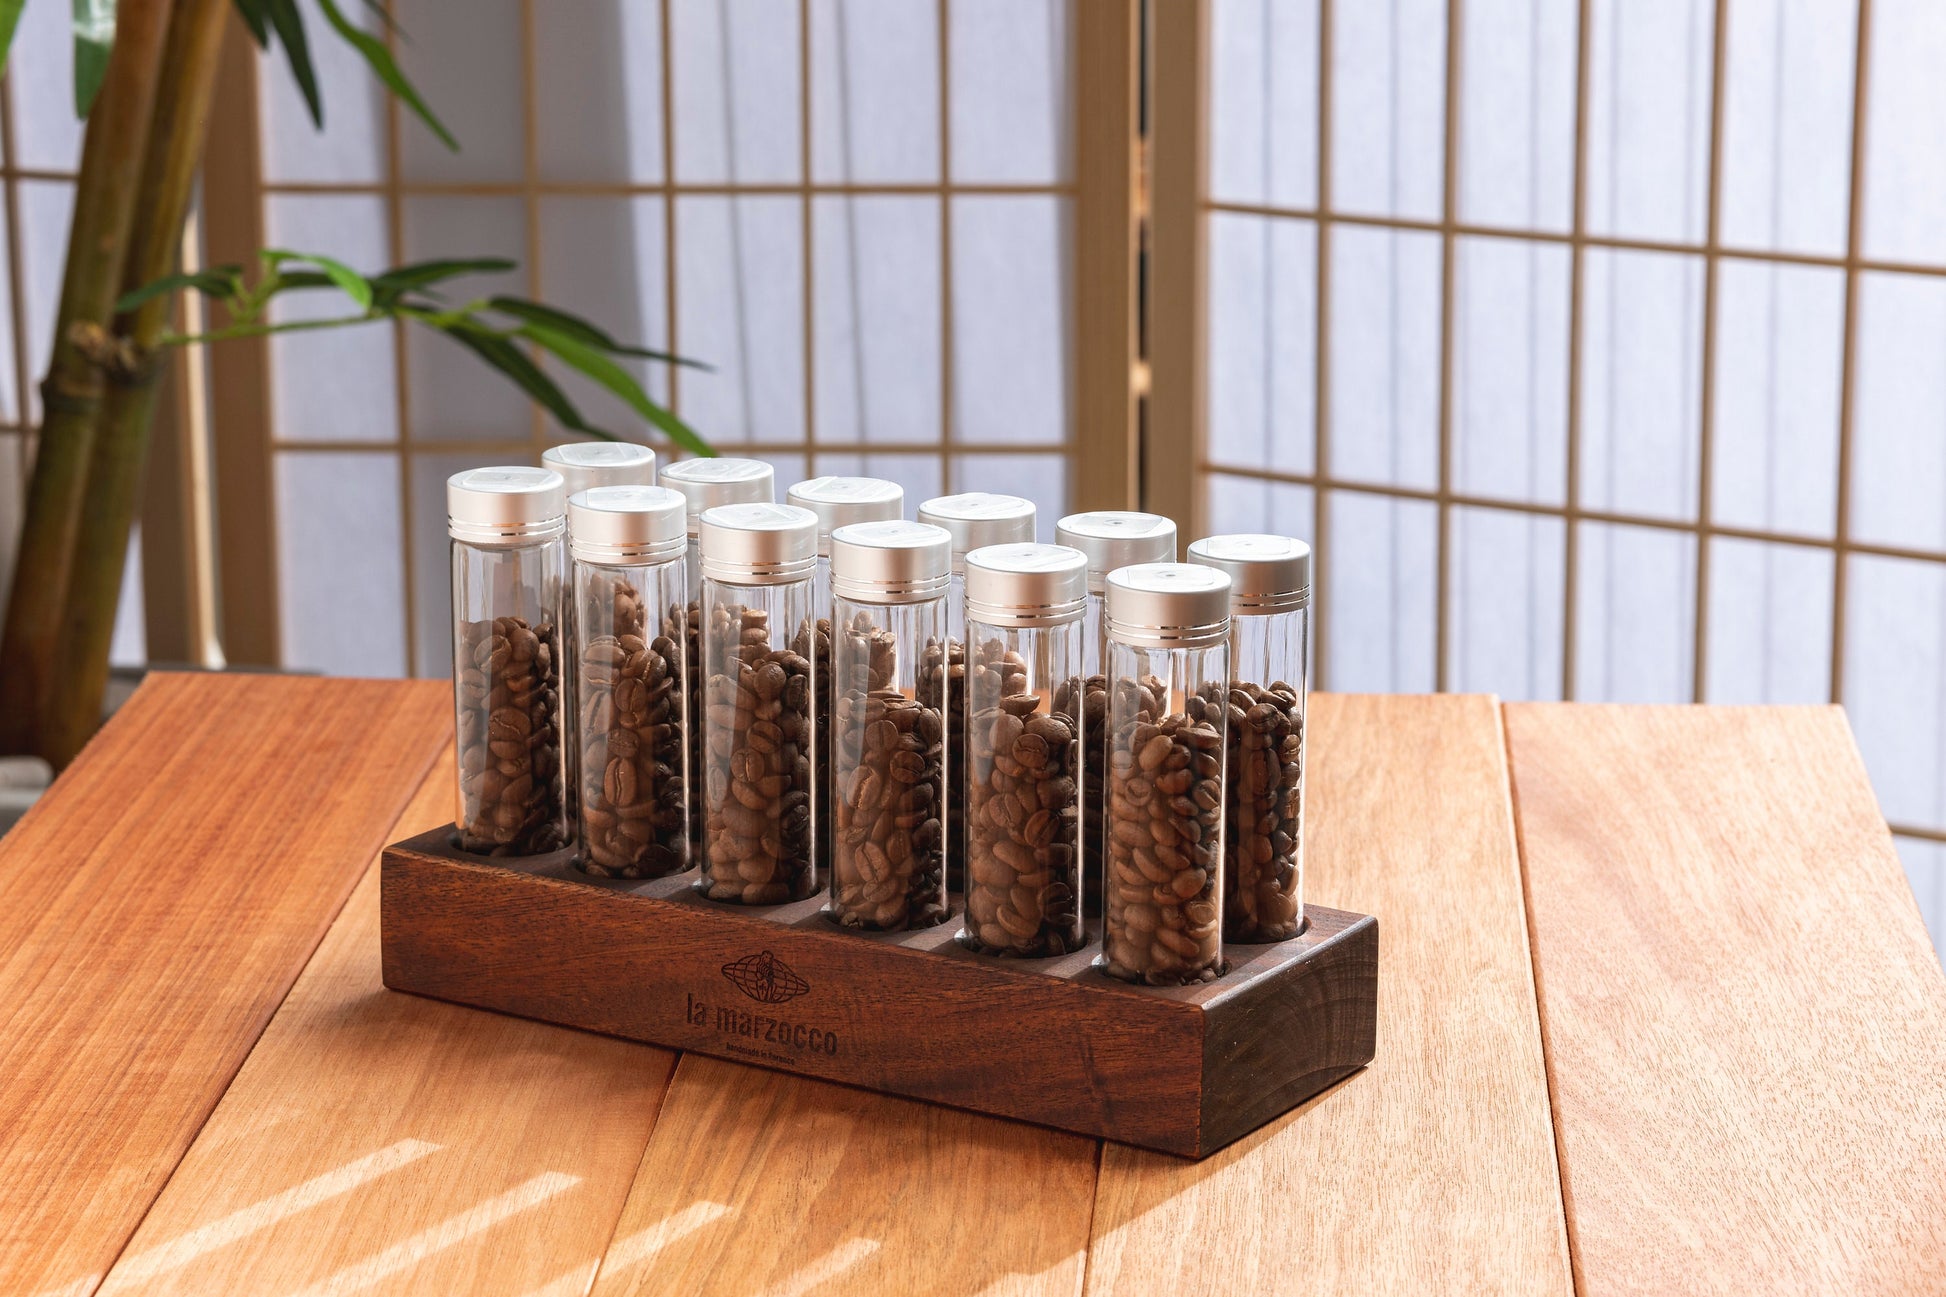 Teak Wood and Resin Single-Serve Drip Coffee Stand - Fresh Beans – GlobeIn